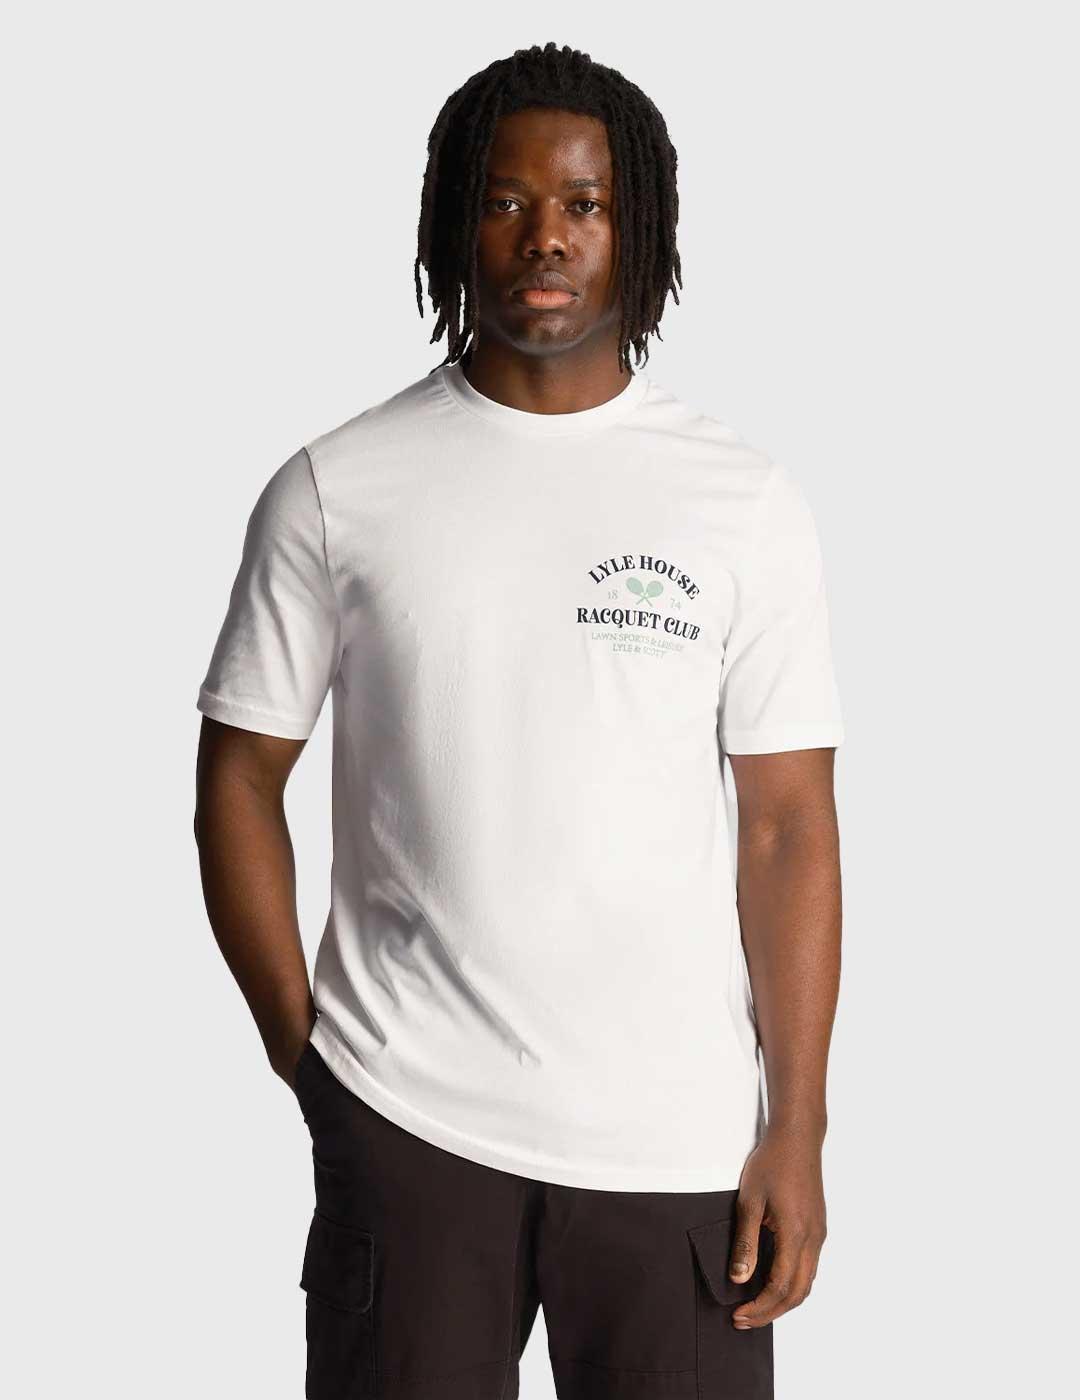 Lyle & Scott Racquet Club Graphic Camiseta blanca de hombre